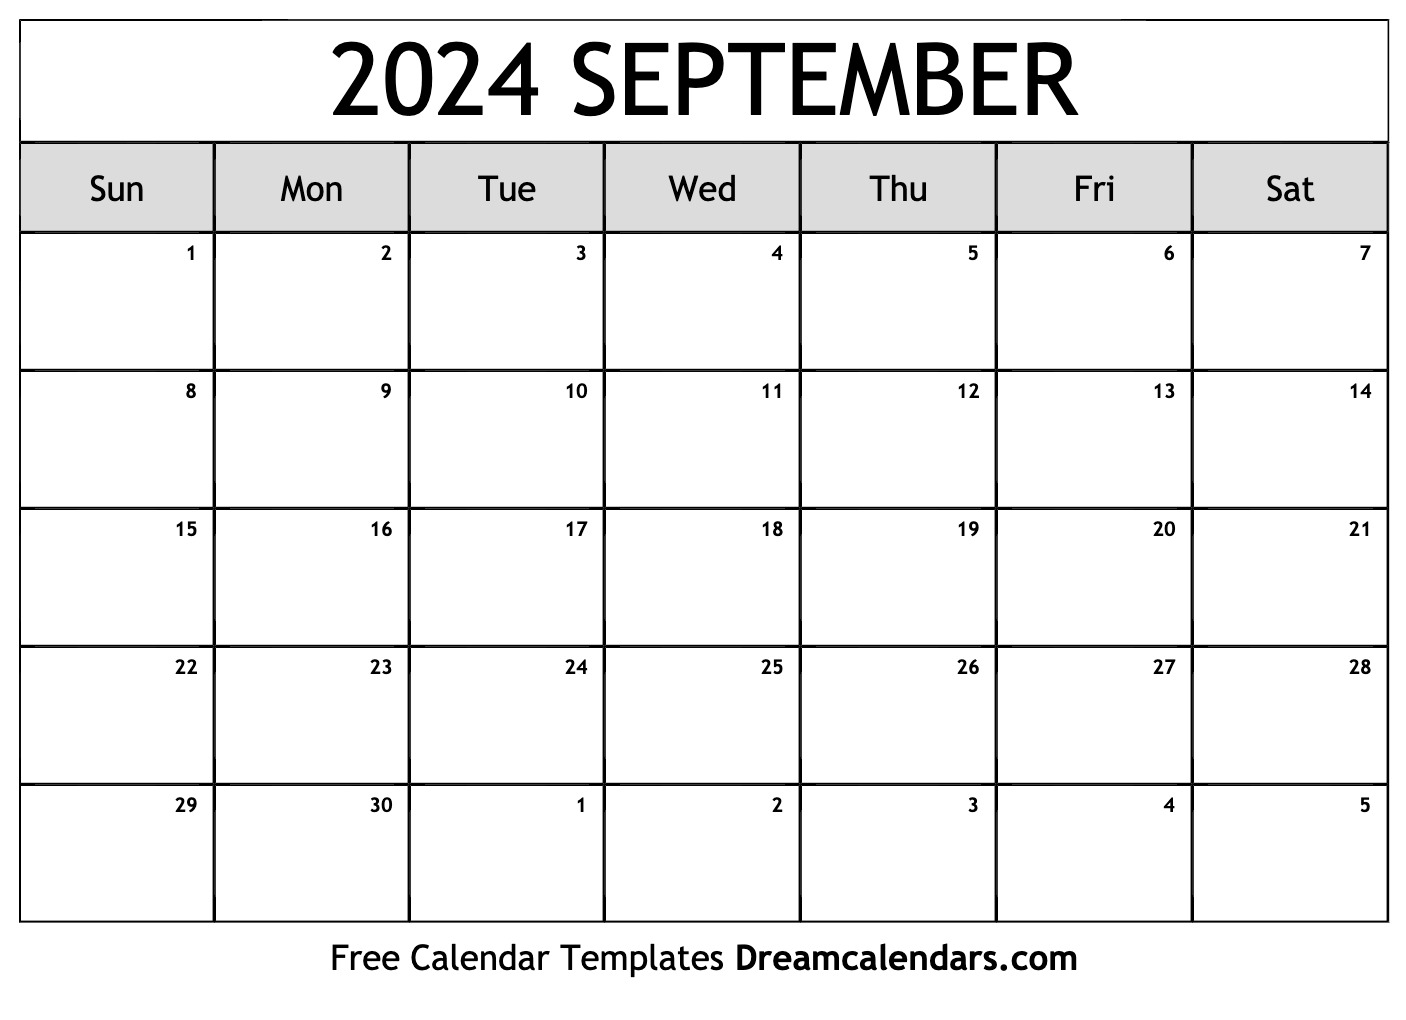 september-2024-free-online-calendar-gambaran